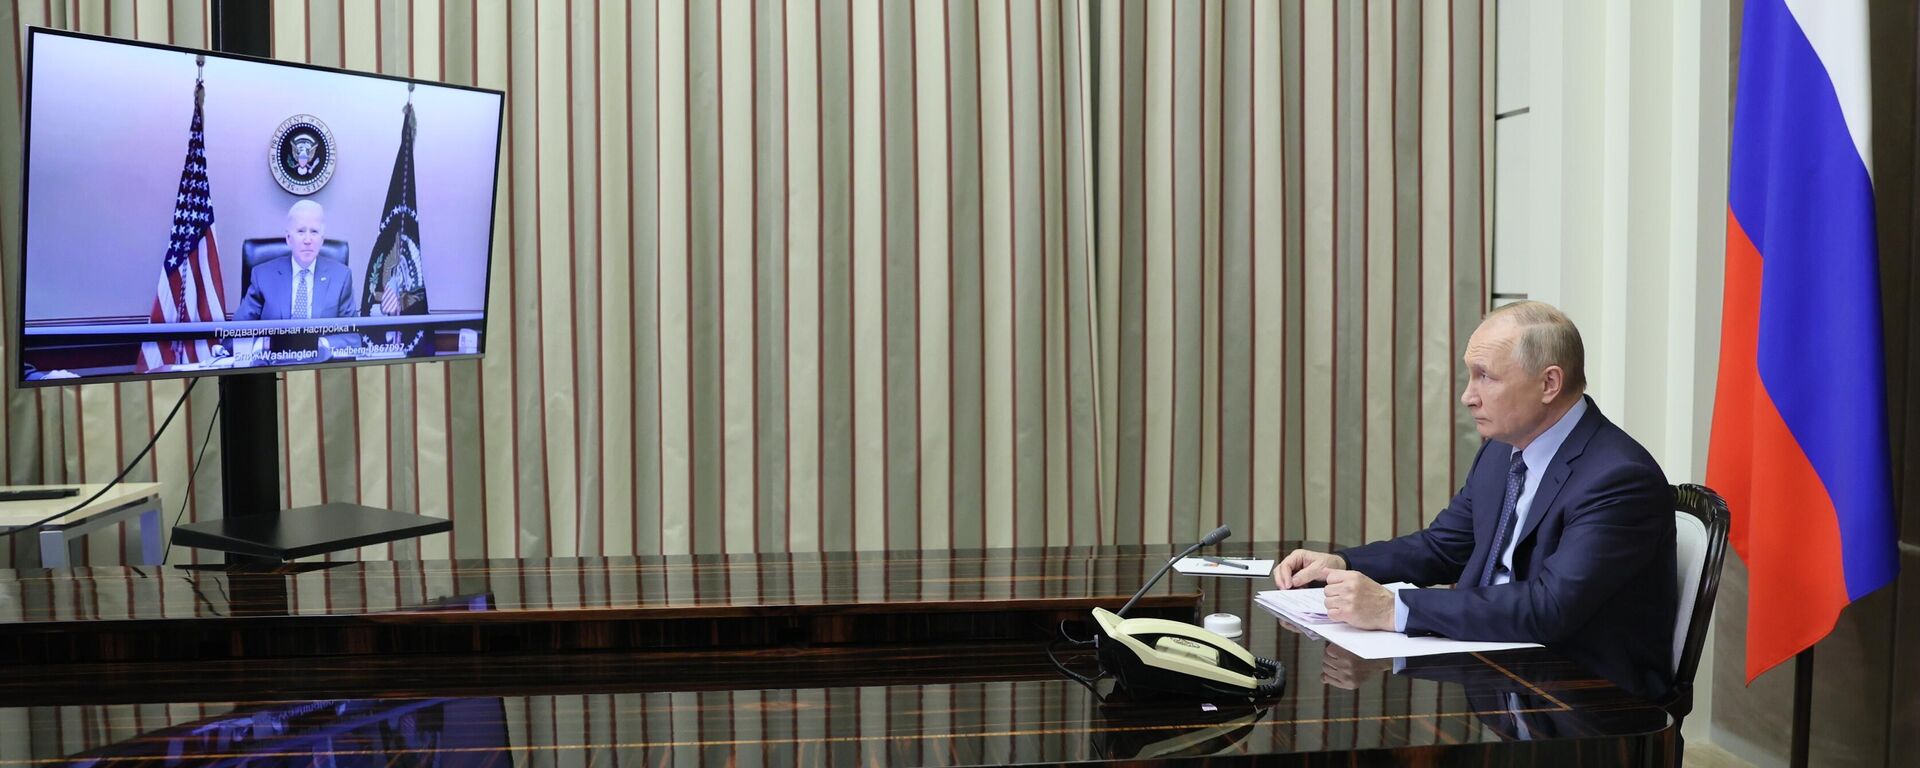 Переговоры президента РФ В. Путина и президента США Дж. Байдена - Sputnik Ўзбекистон, 1920, 08.12.2021